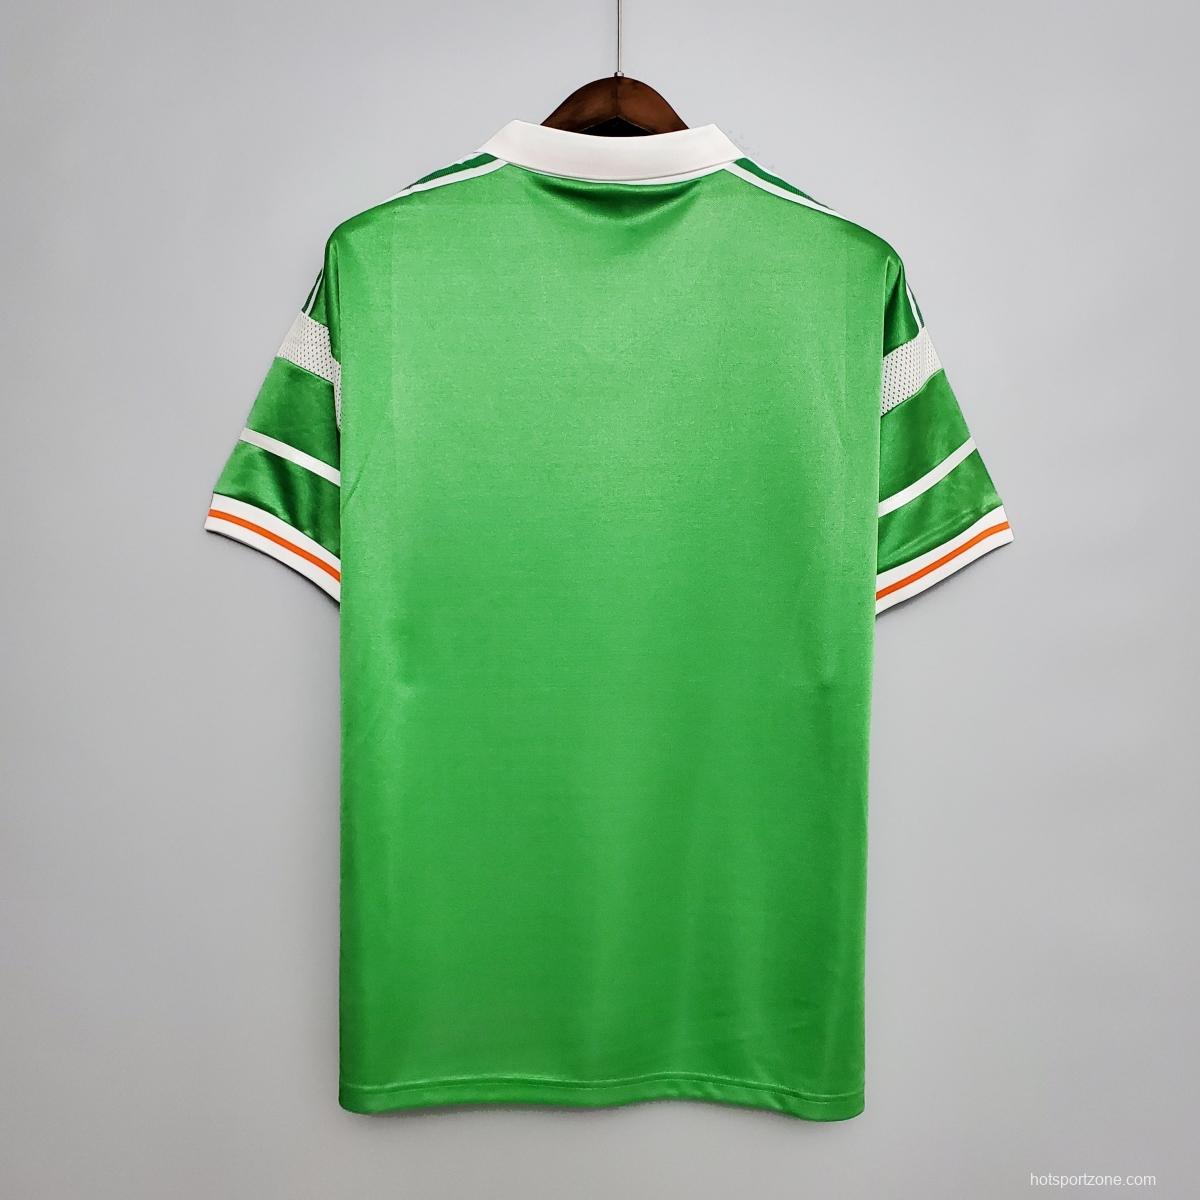 Retro 1988 Ireland home Soccer Jersey